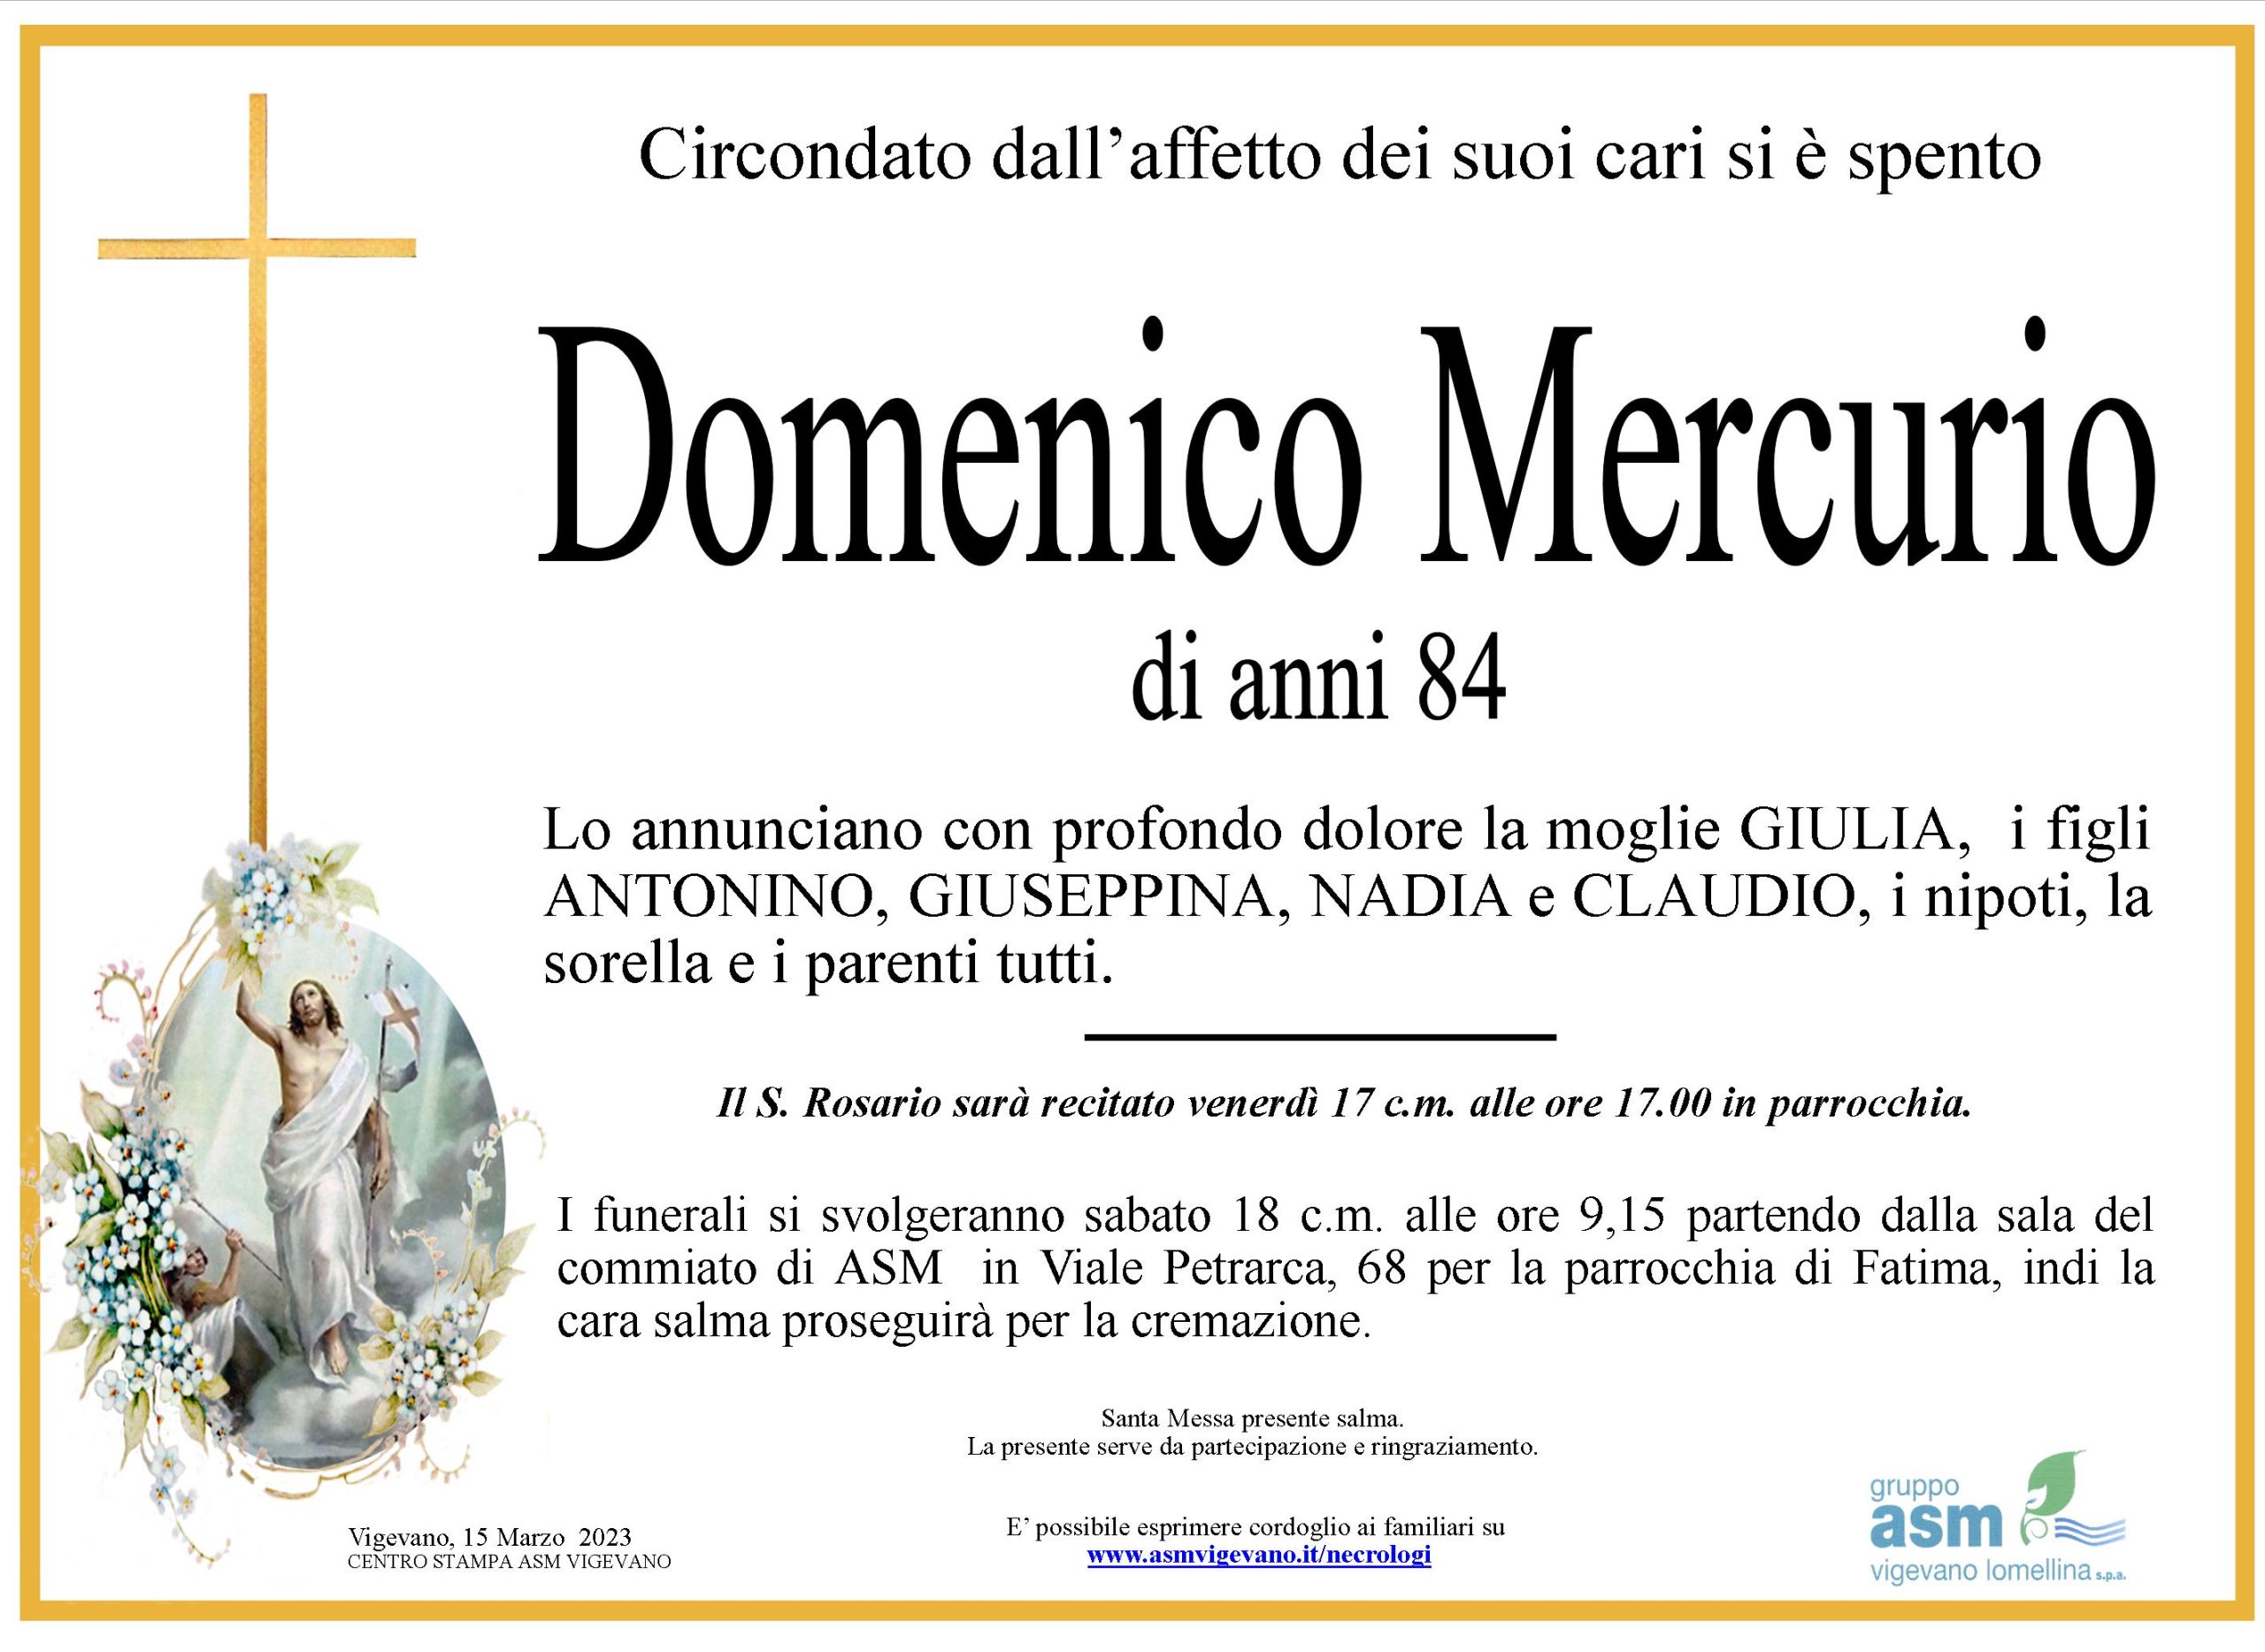 Domenico Mercurio